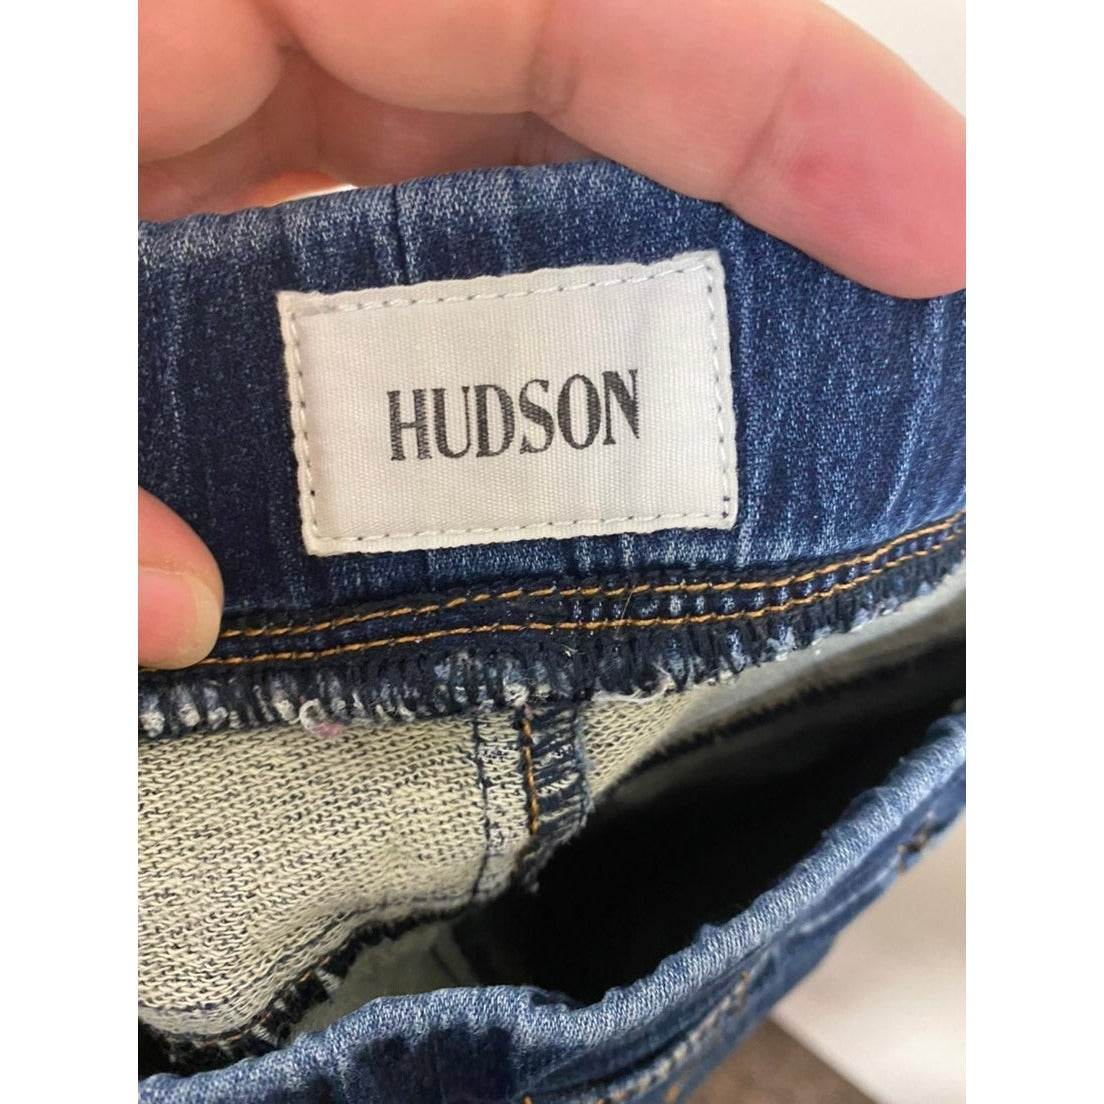 Hudson Skinny Jeans size 14 girls